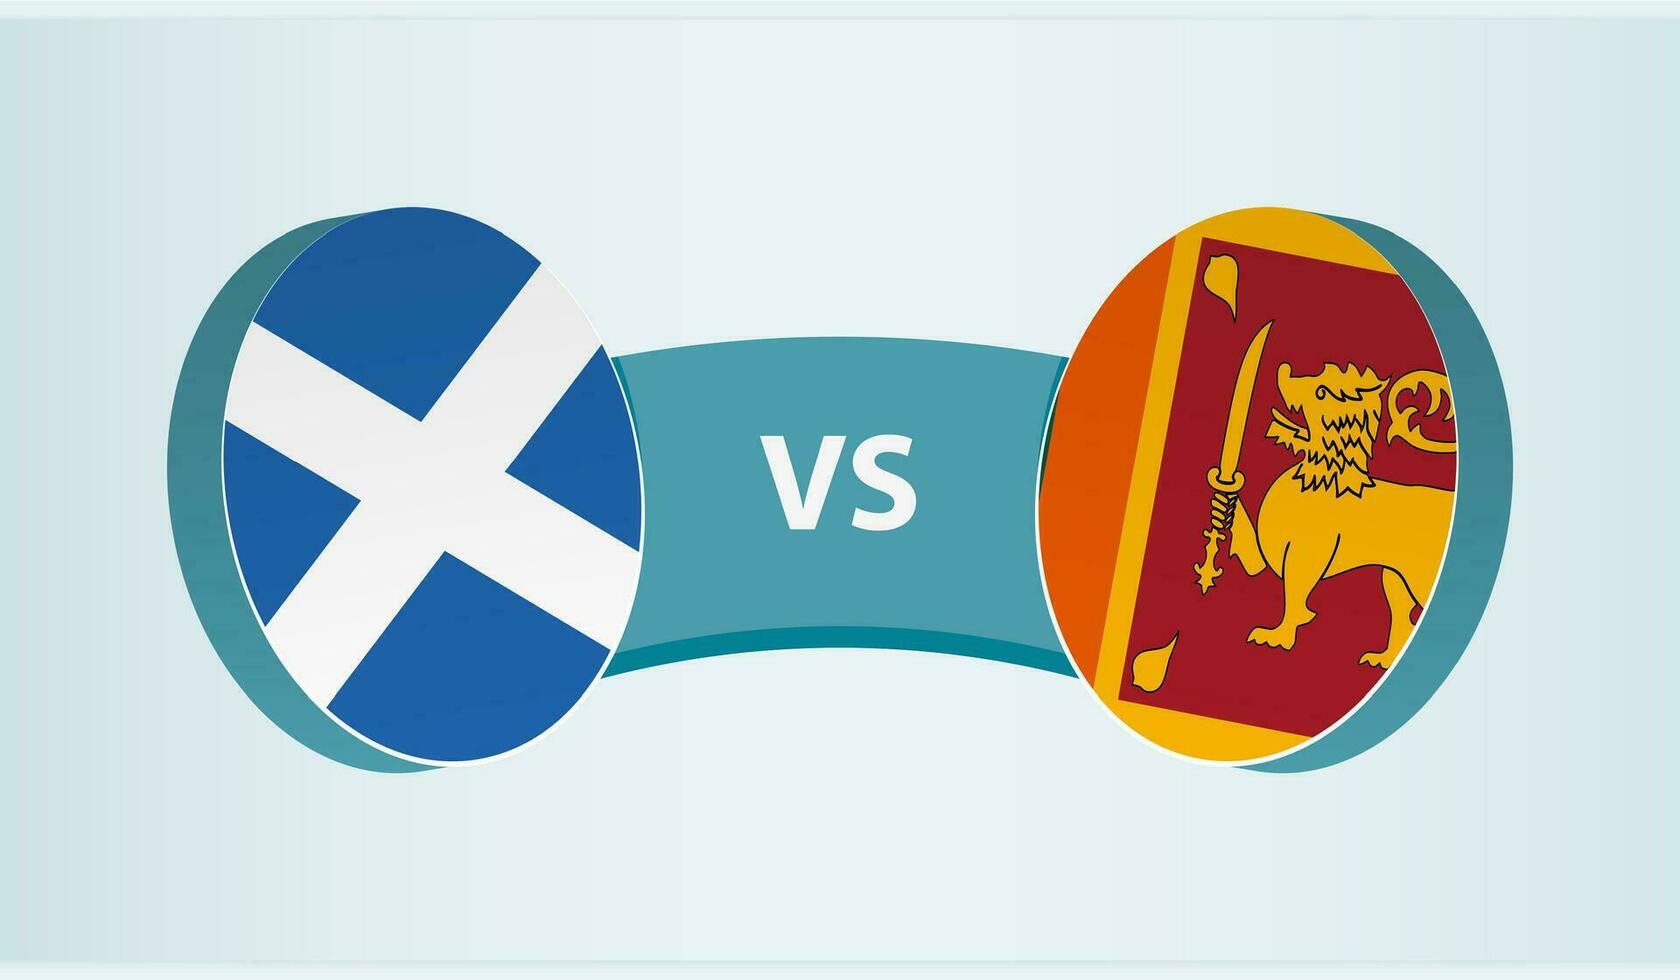 Escócia versus sri lanka, equipe Esportes concorrência conceito. vetor